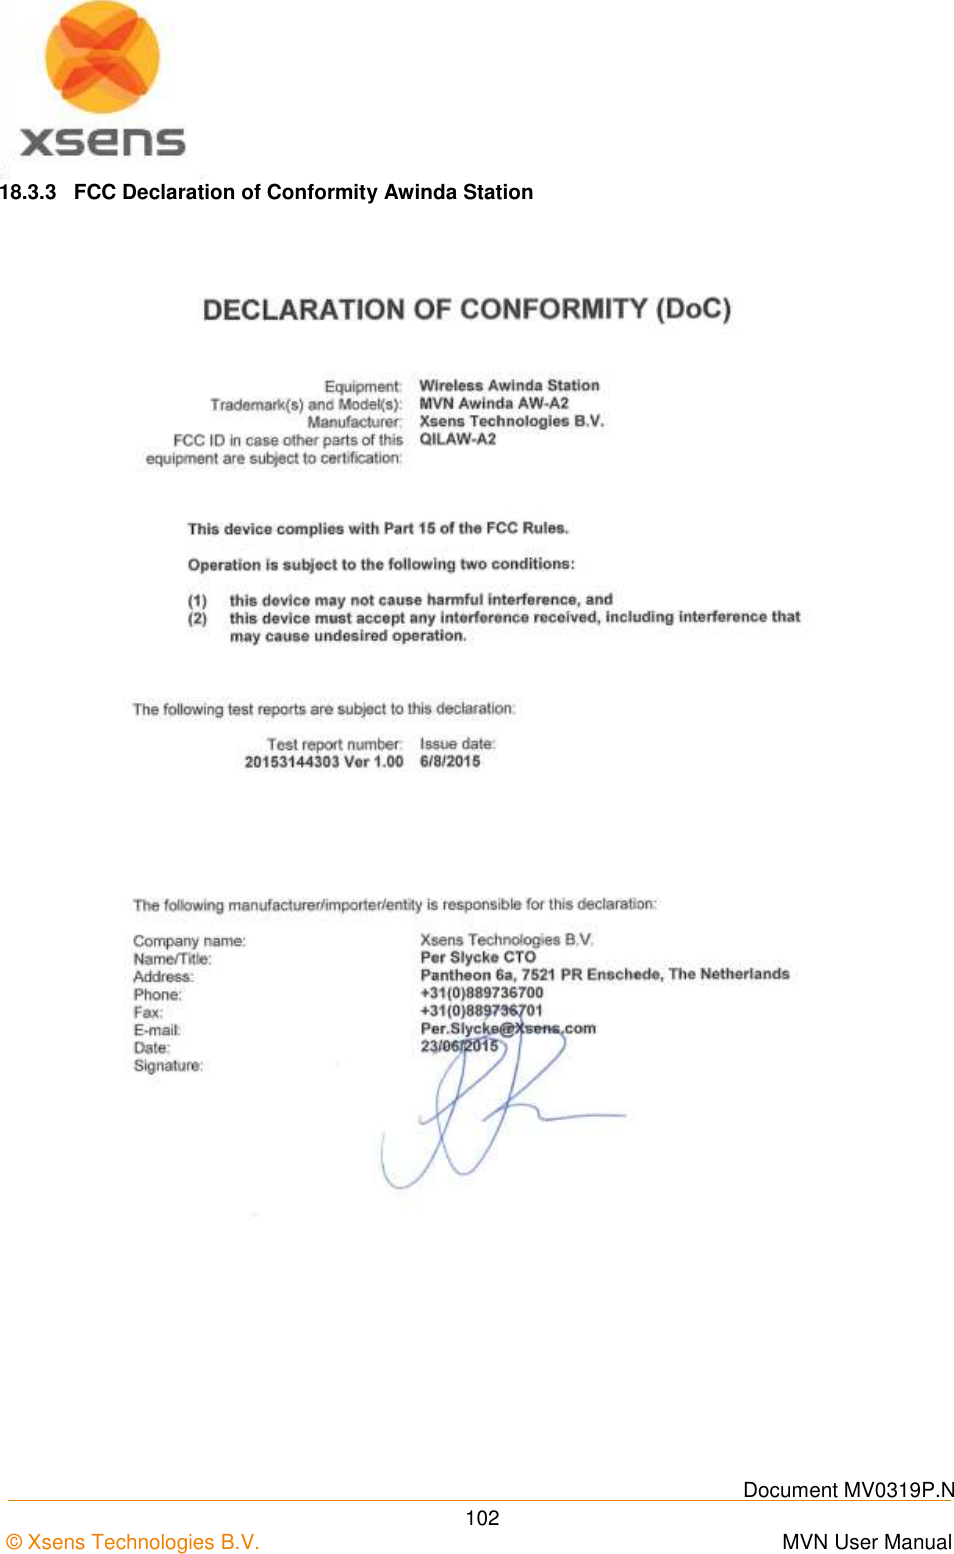    Document MV0319P.N © Xsens Technologies B.V.      MVN User Manual  102 18.3.3  FCC Declaration of Conformity Awinda Station        